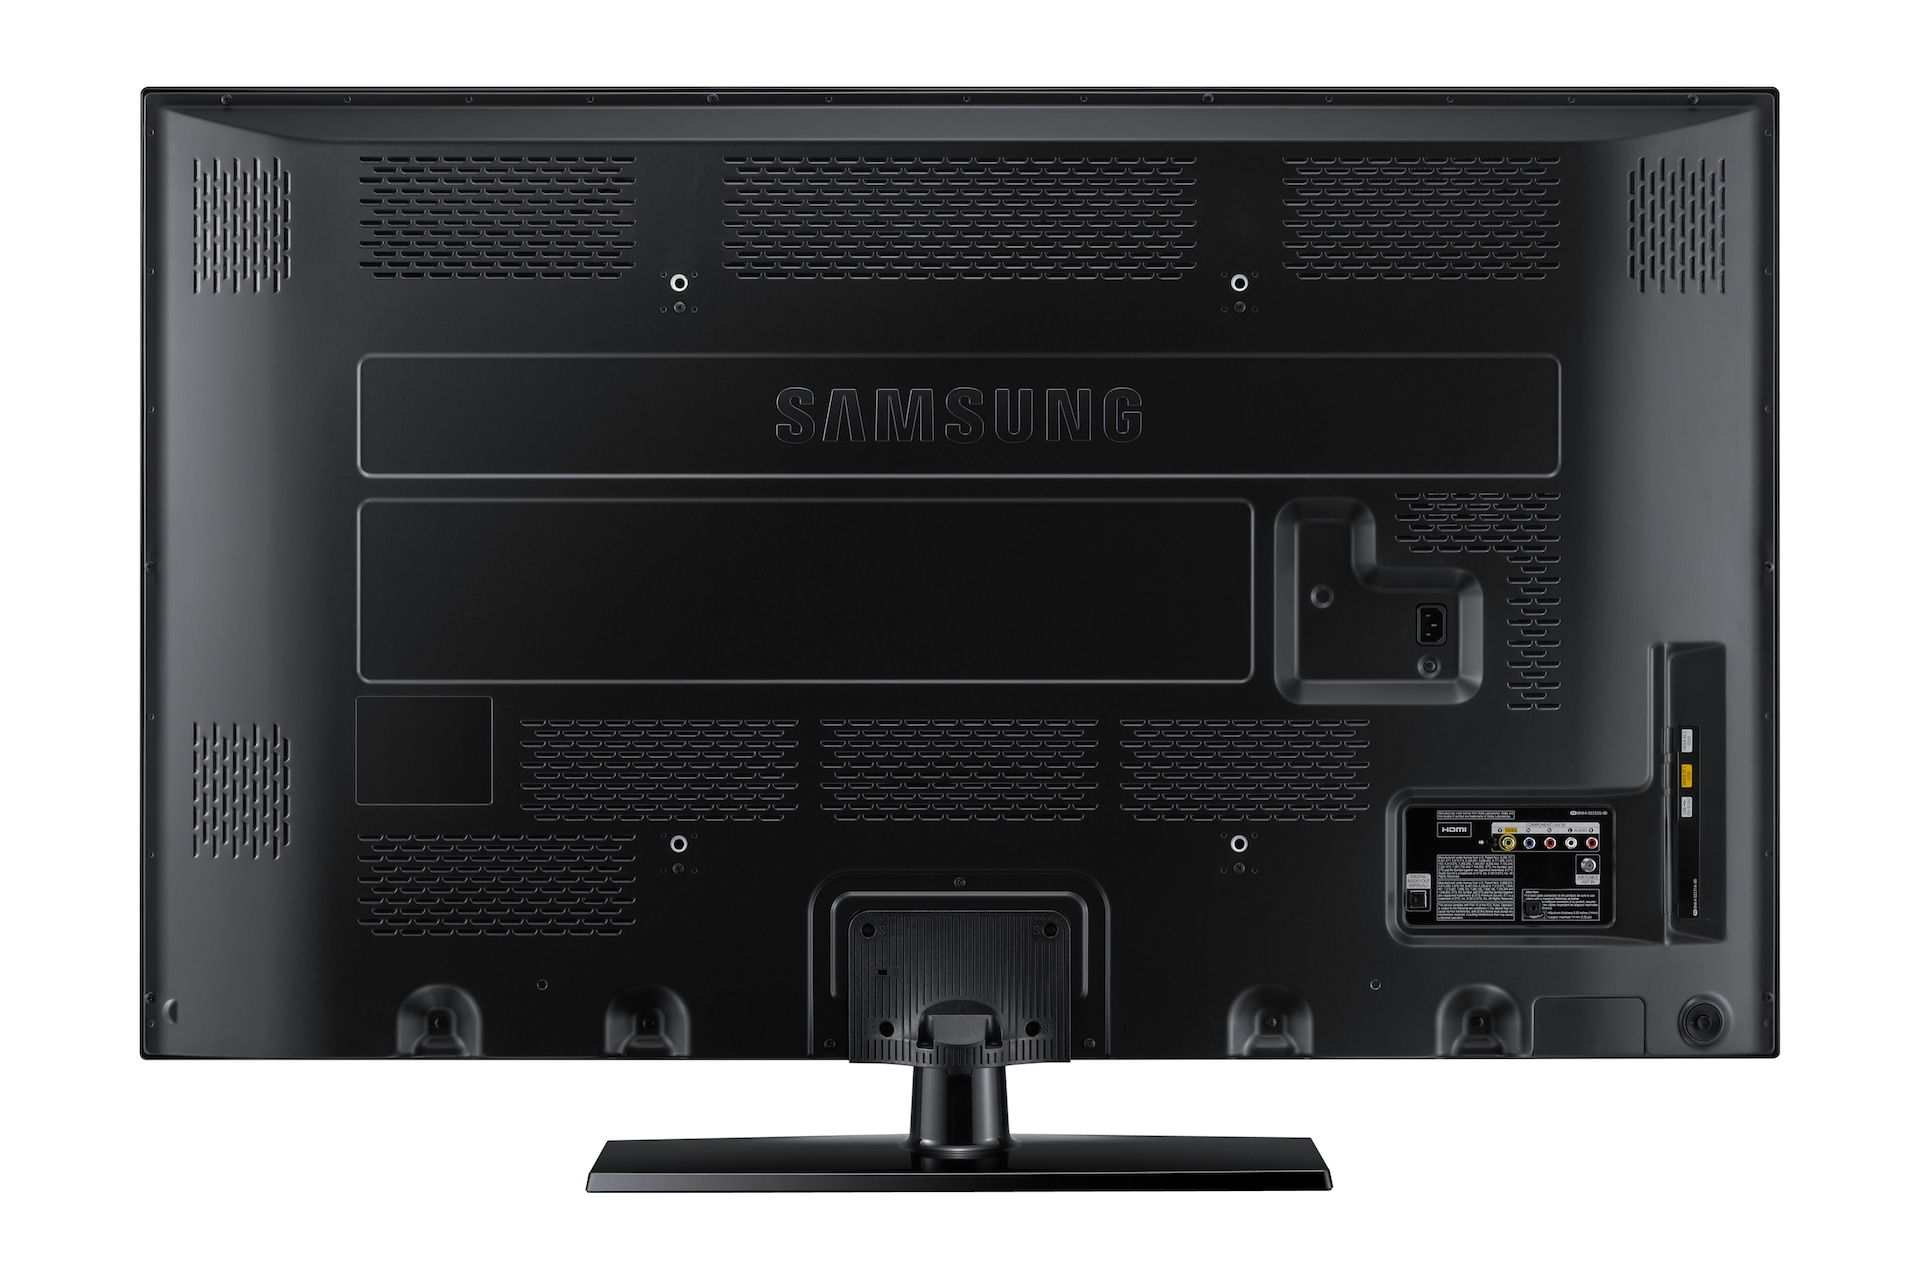 Samsung 43 Inch H4500 Series 4 Plasma Tv With Football Mode